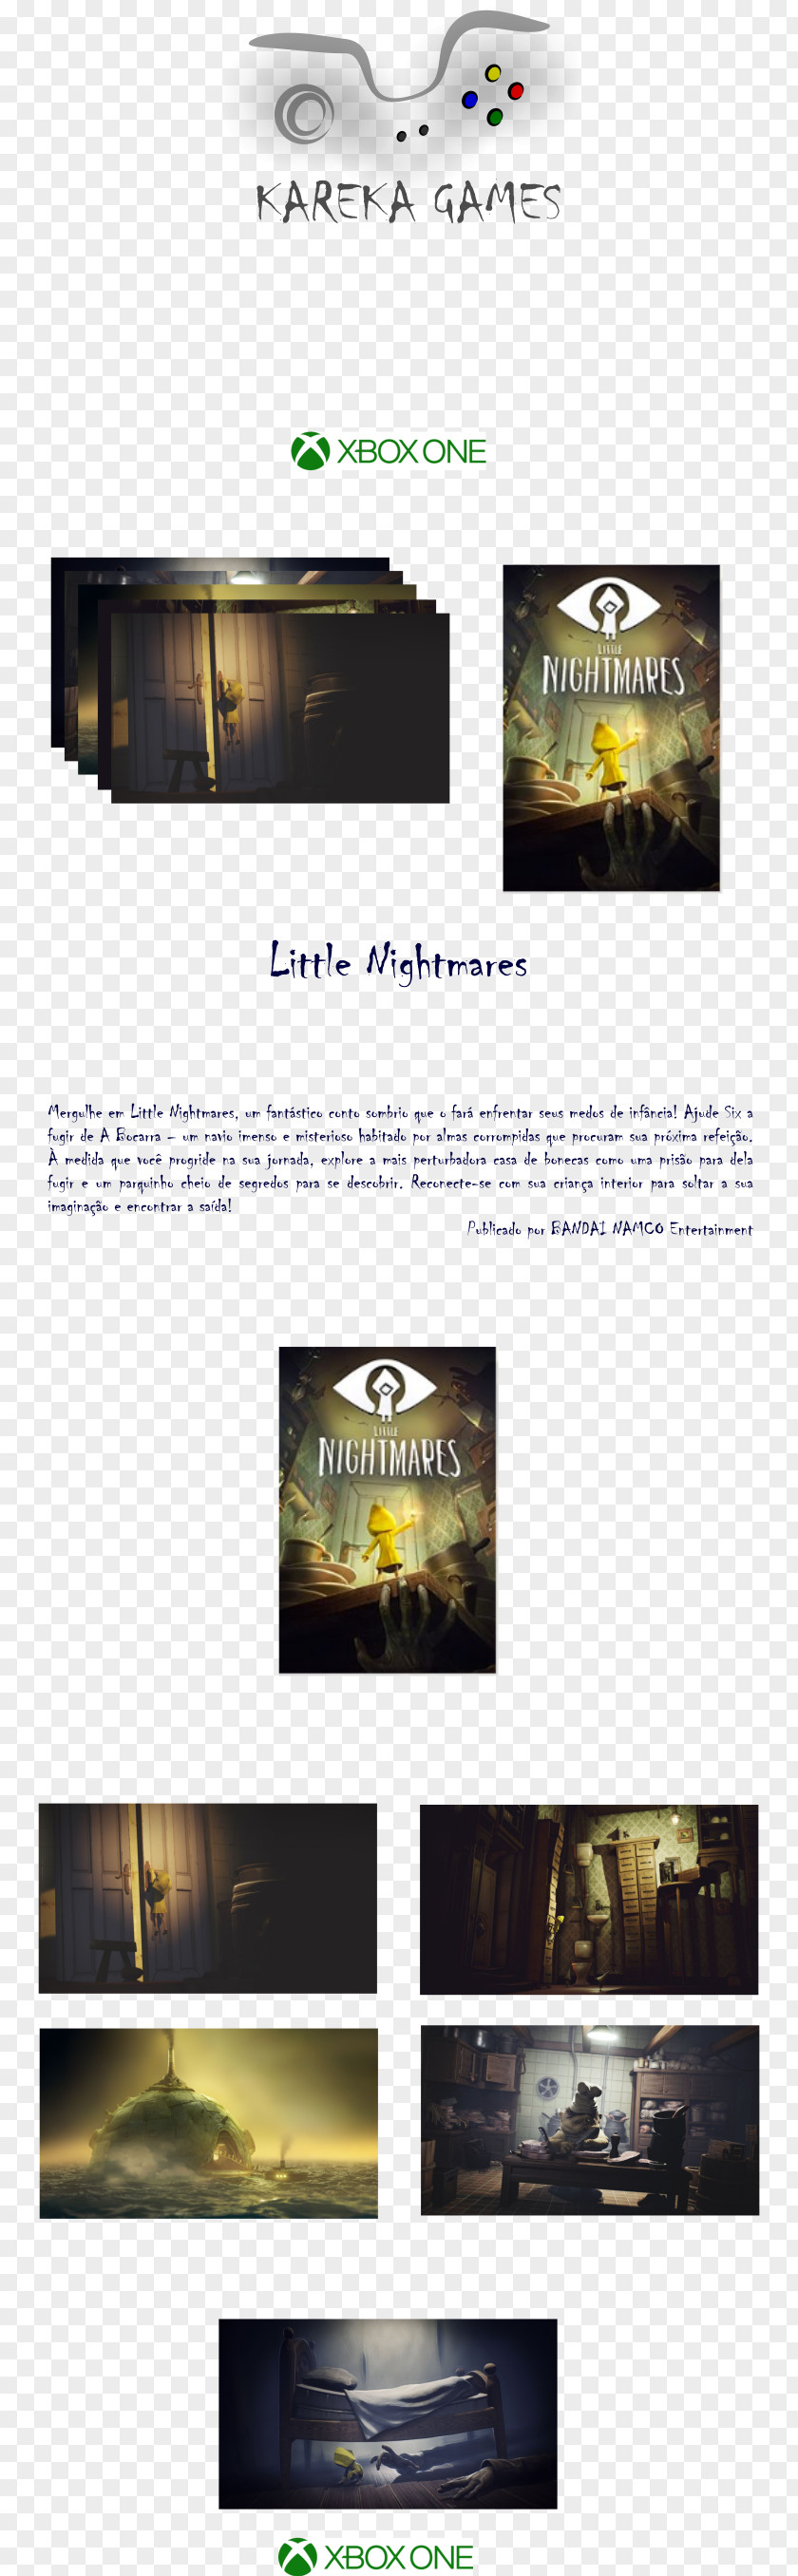 Little Nightmares (Digital Download Code) Brand Xbox One PNG